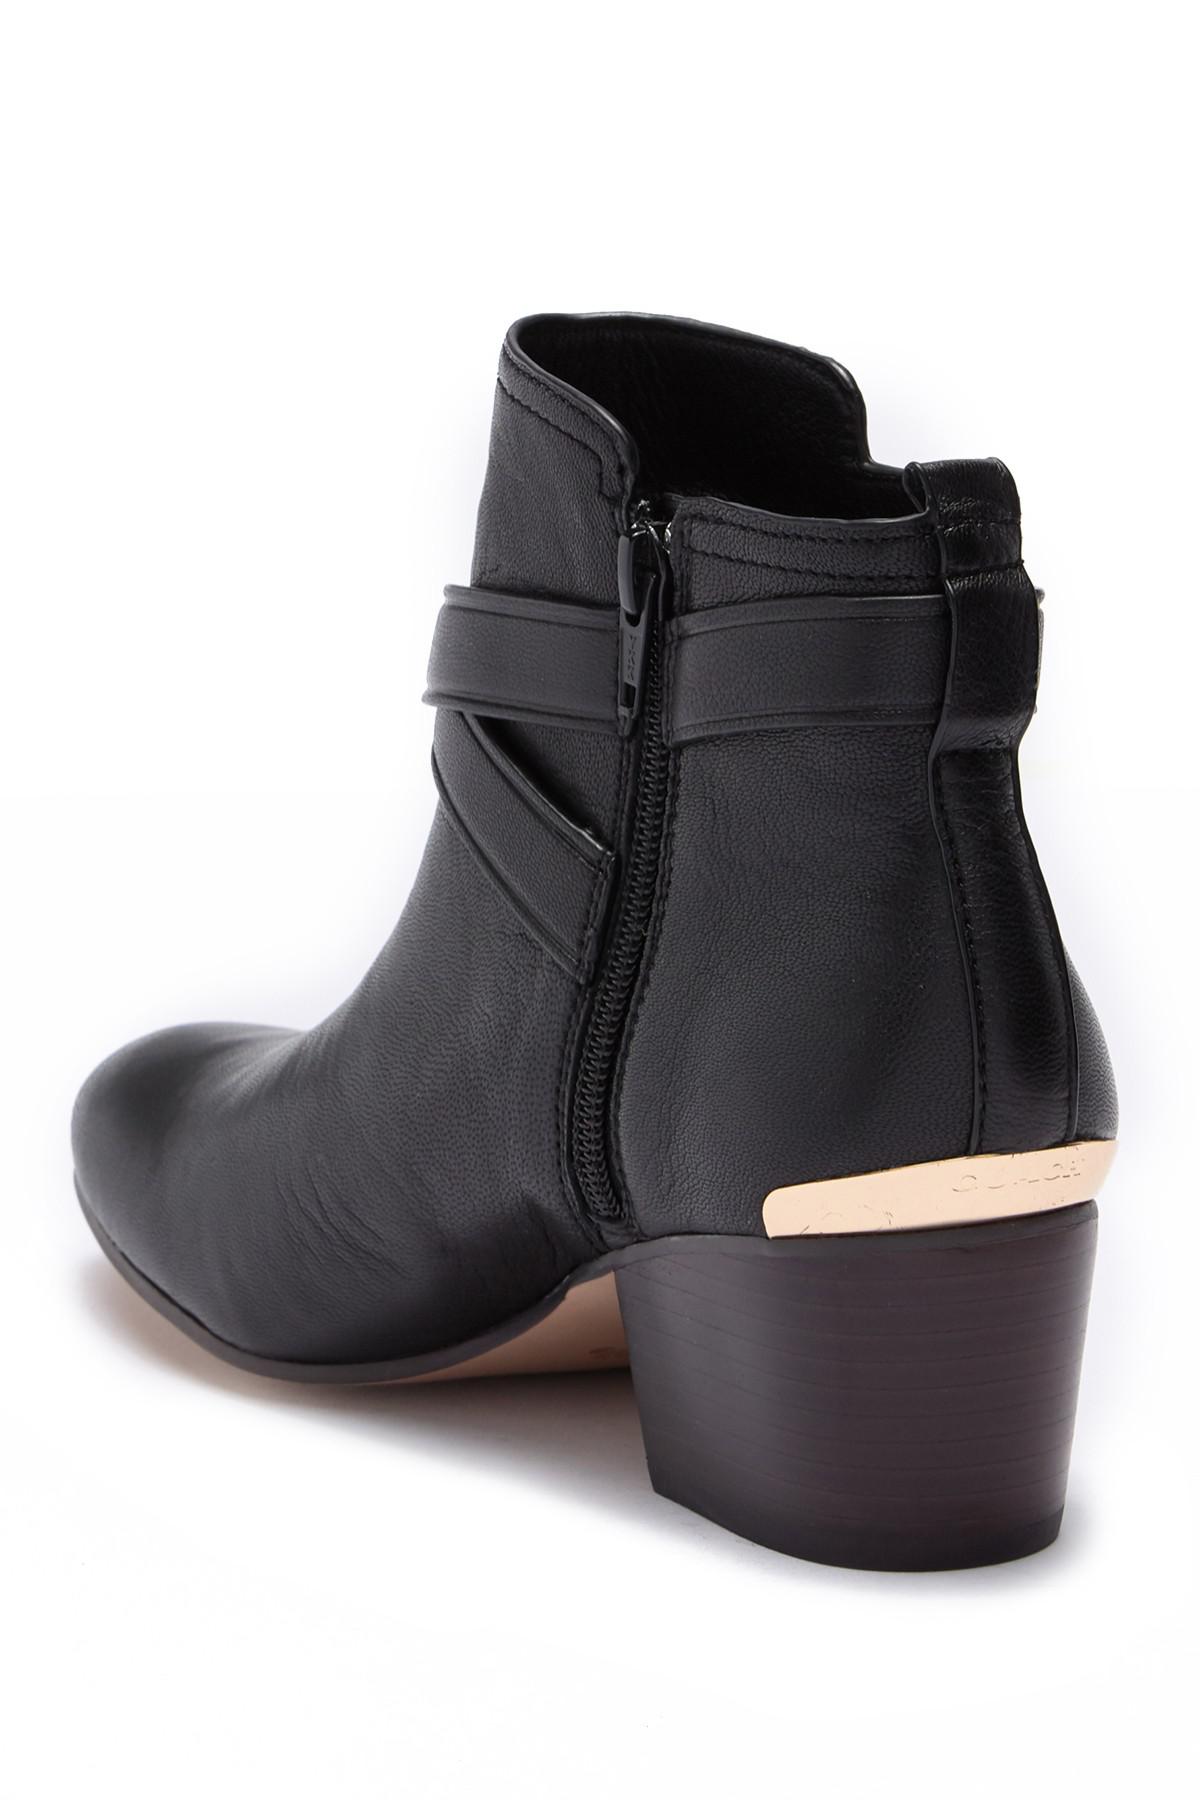 Introducir 91+ imagen coach black leather boots - Abzlocal.mx